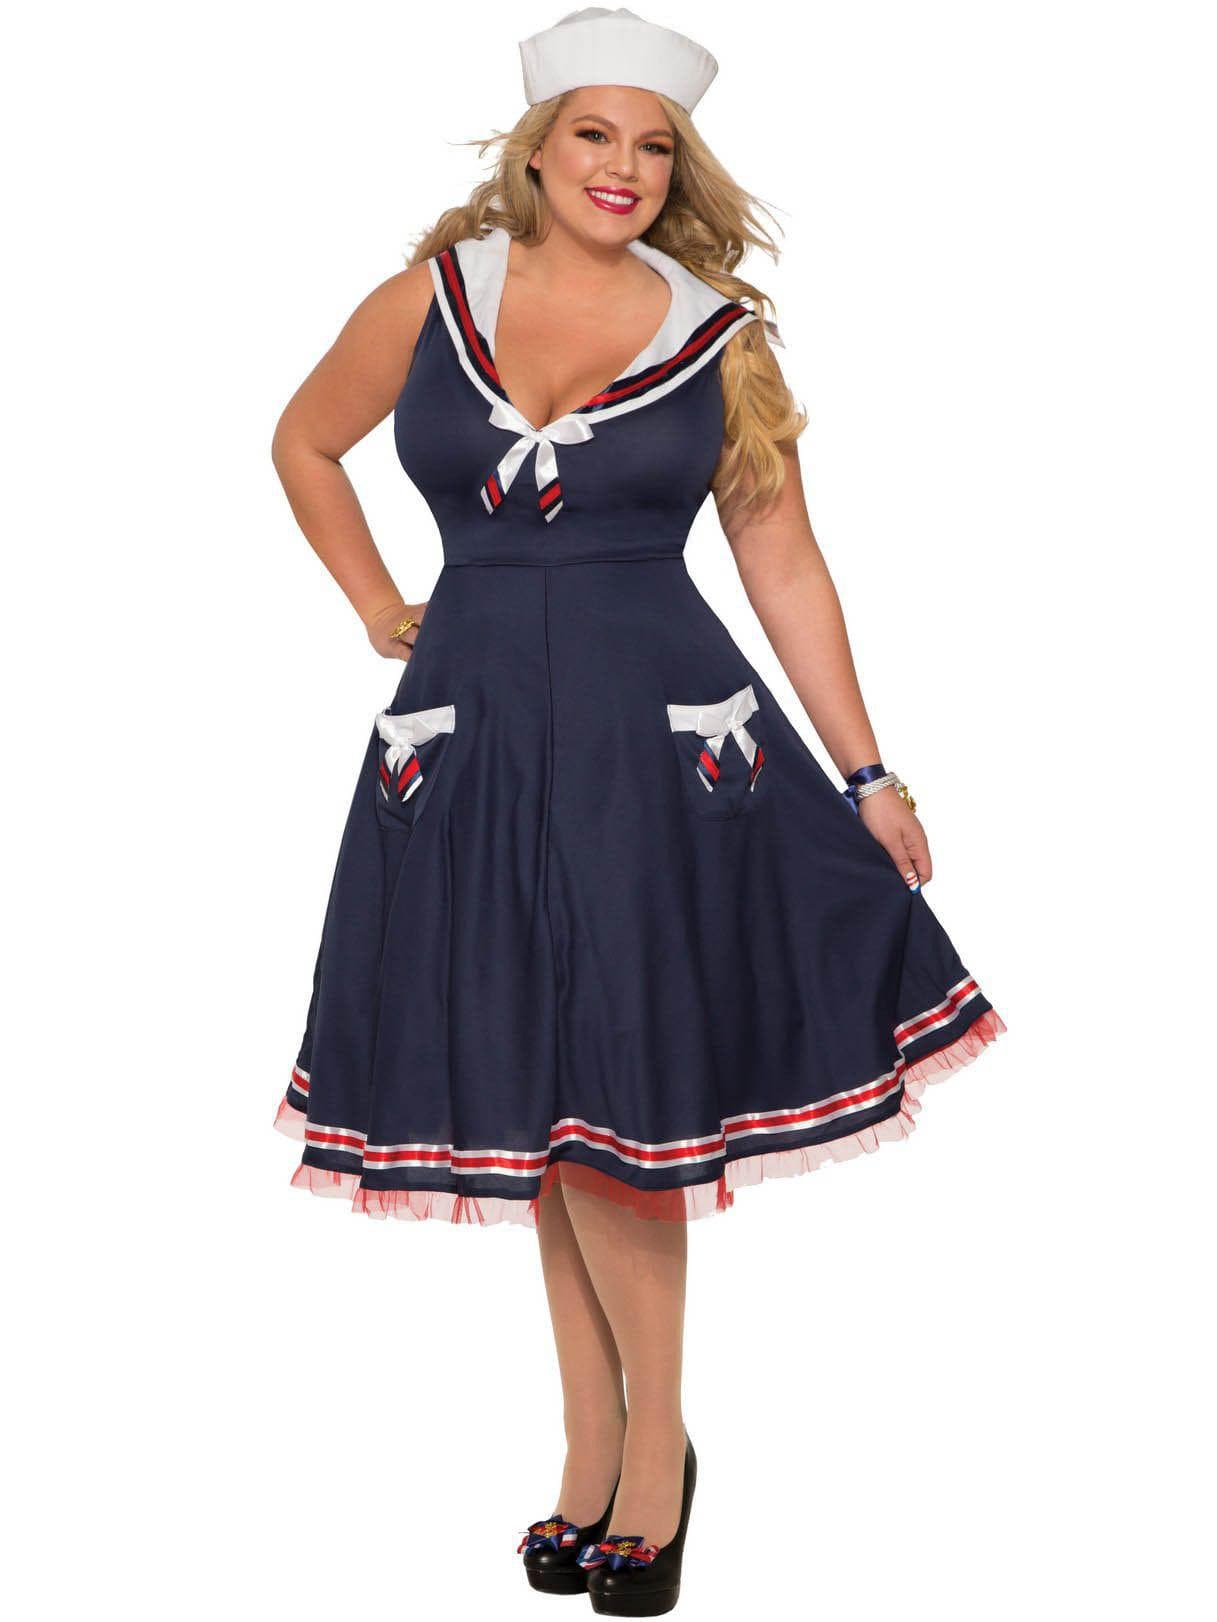 Adult Ahoy Lady Plus Size Costume - costumes.com